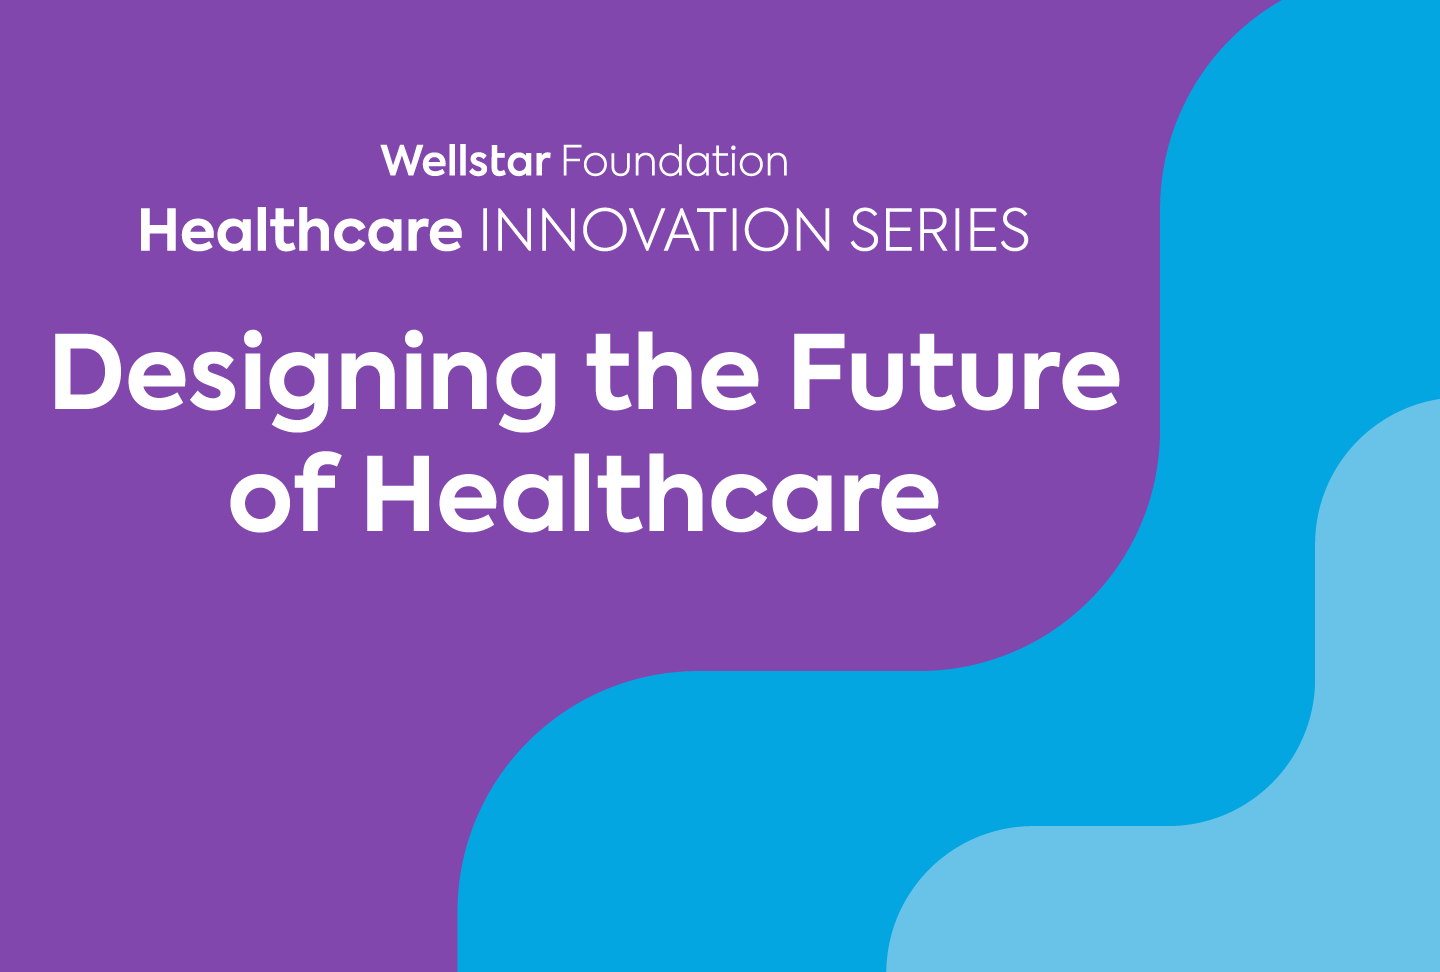 Wellstar Innovation Series Explores Future of Healthcare Image